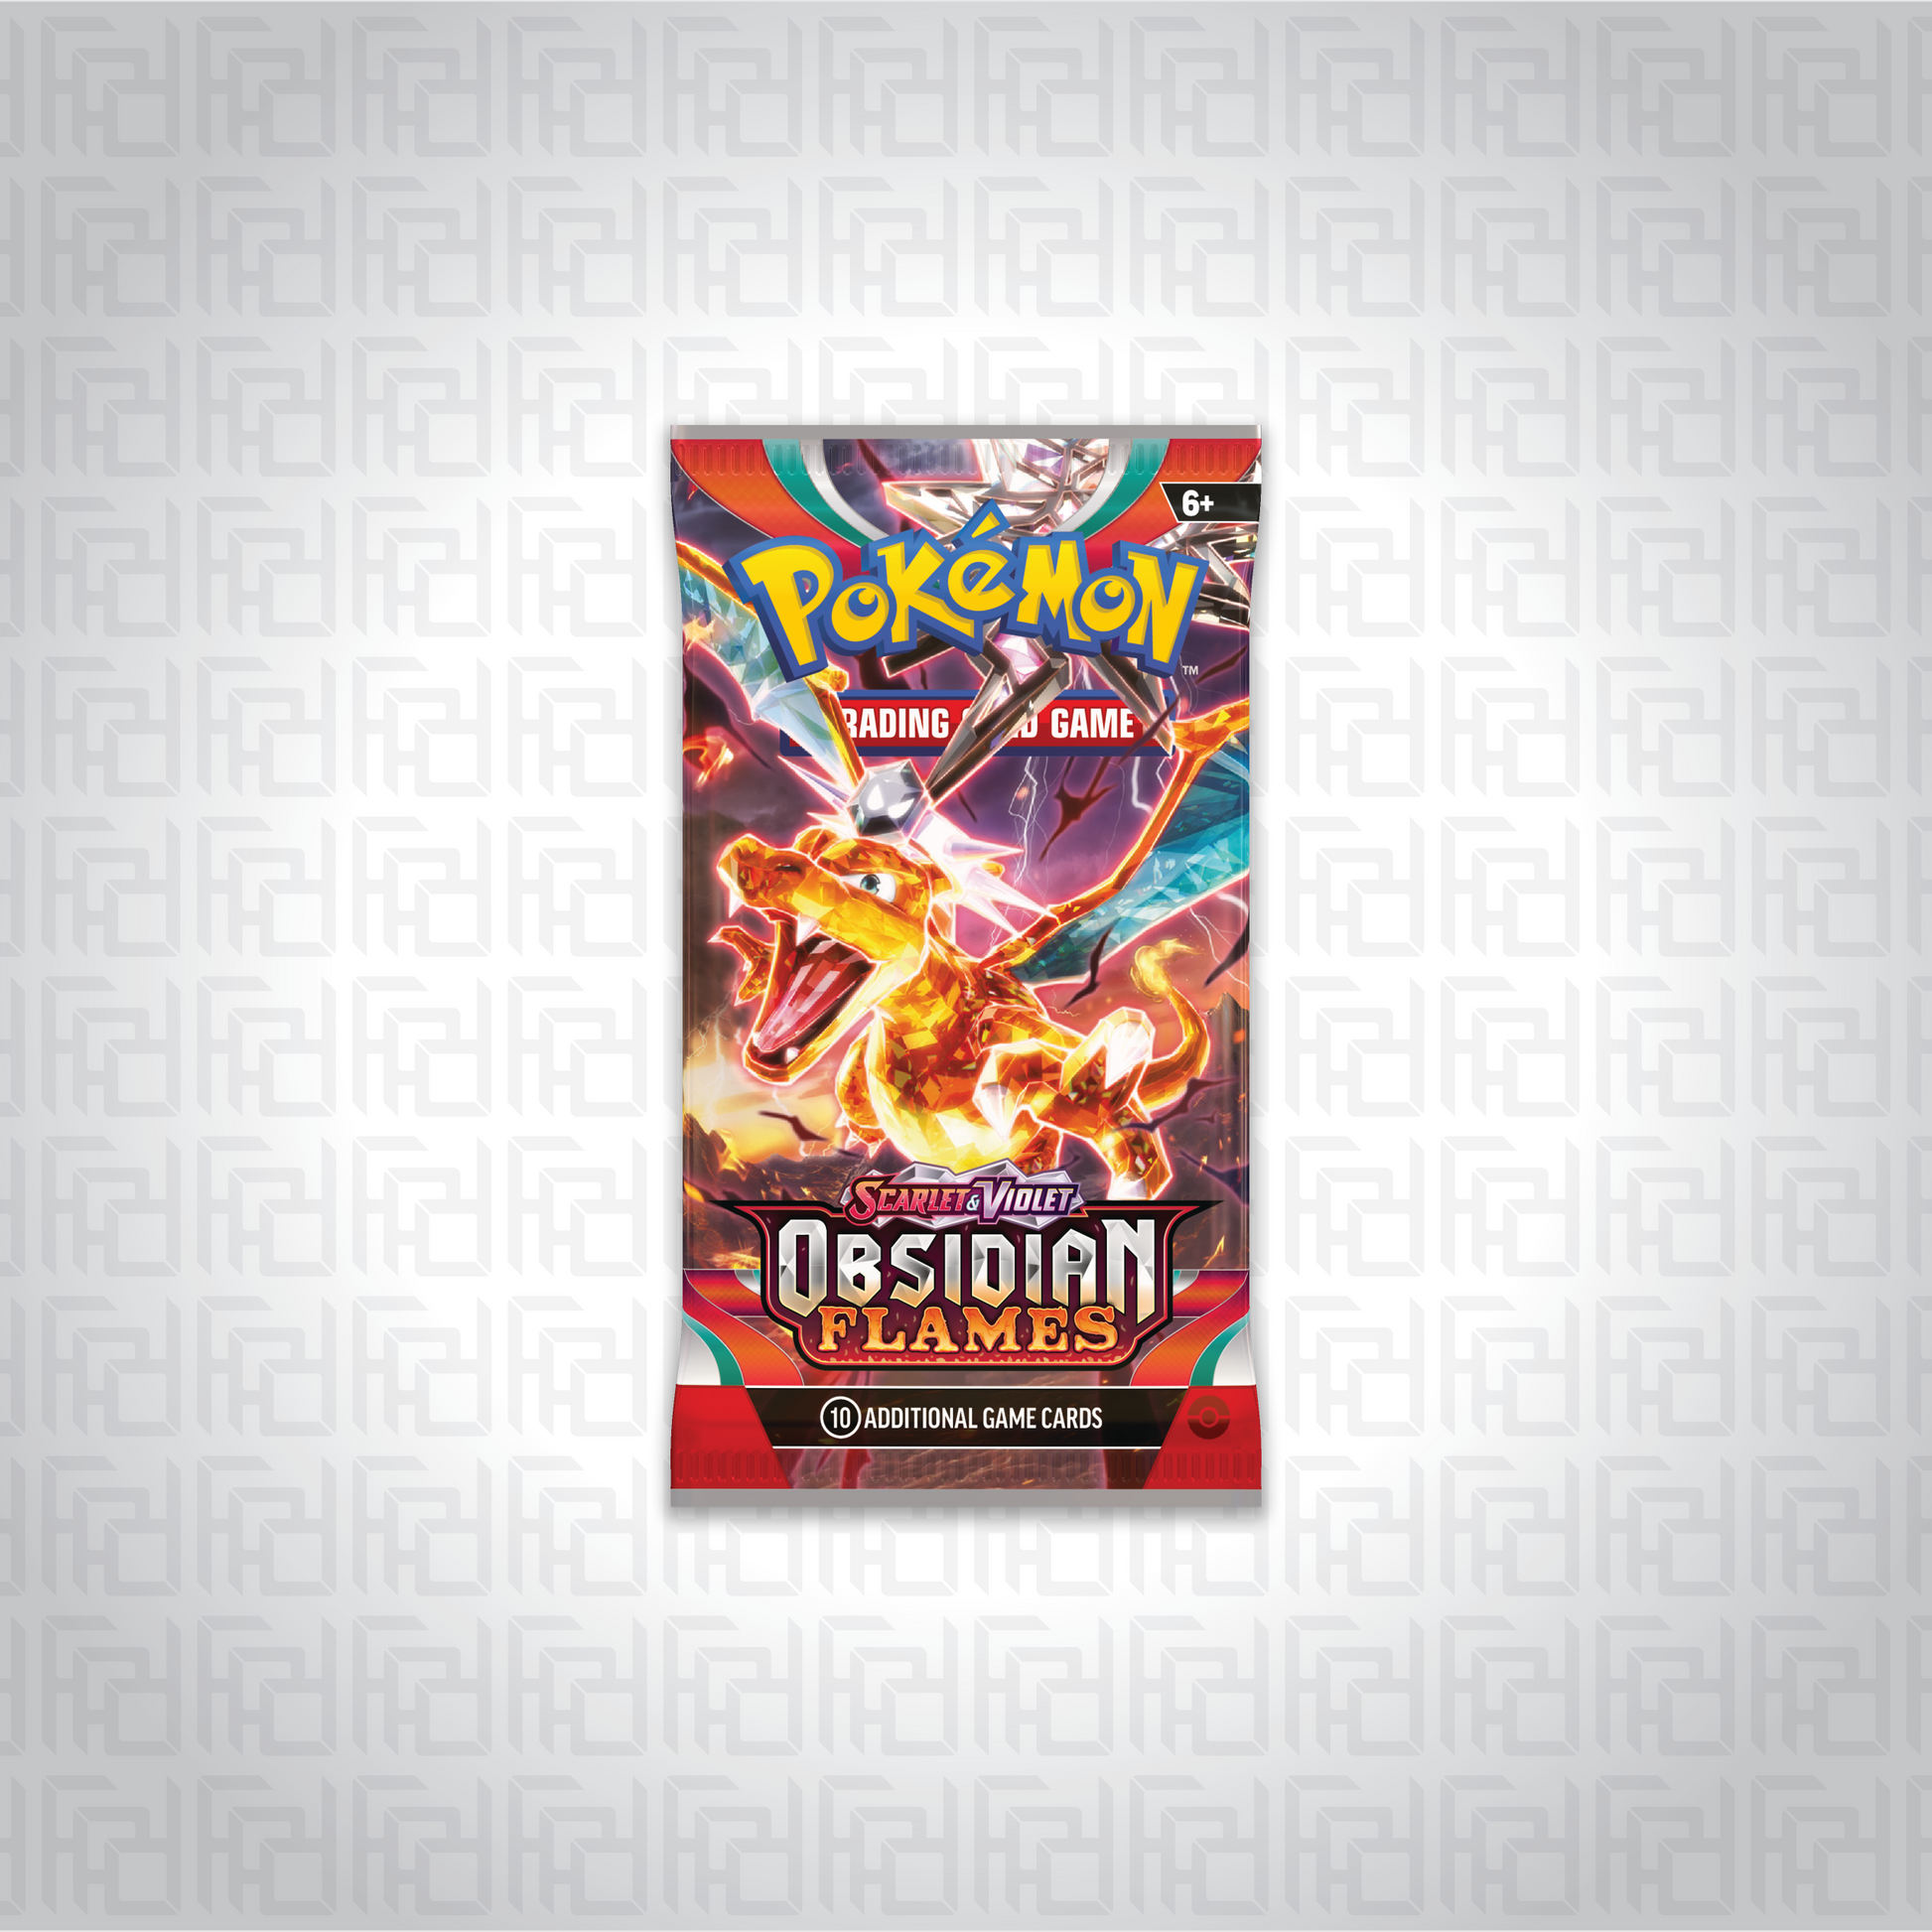 Pokemon Trading Card Game booster pack of Scarlet & Violet—Obsidian Flames expansion.